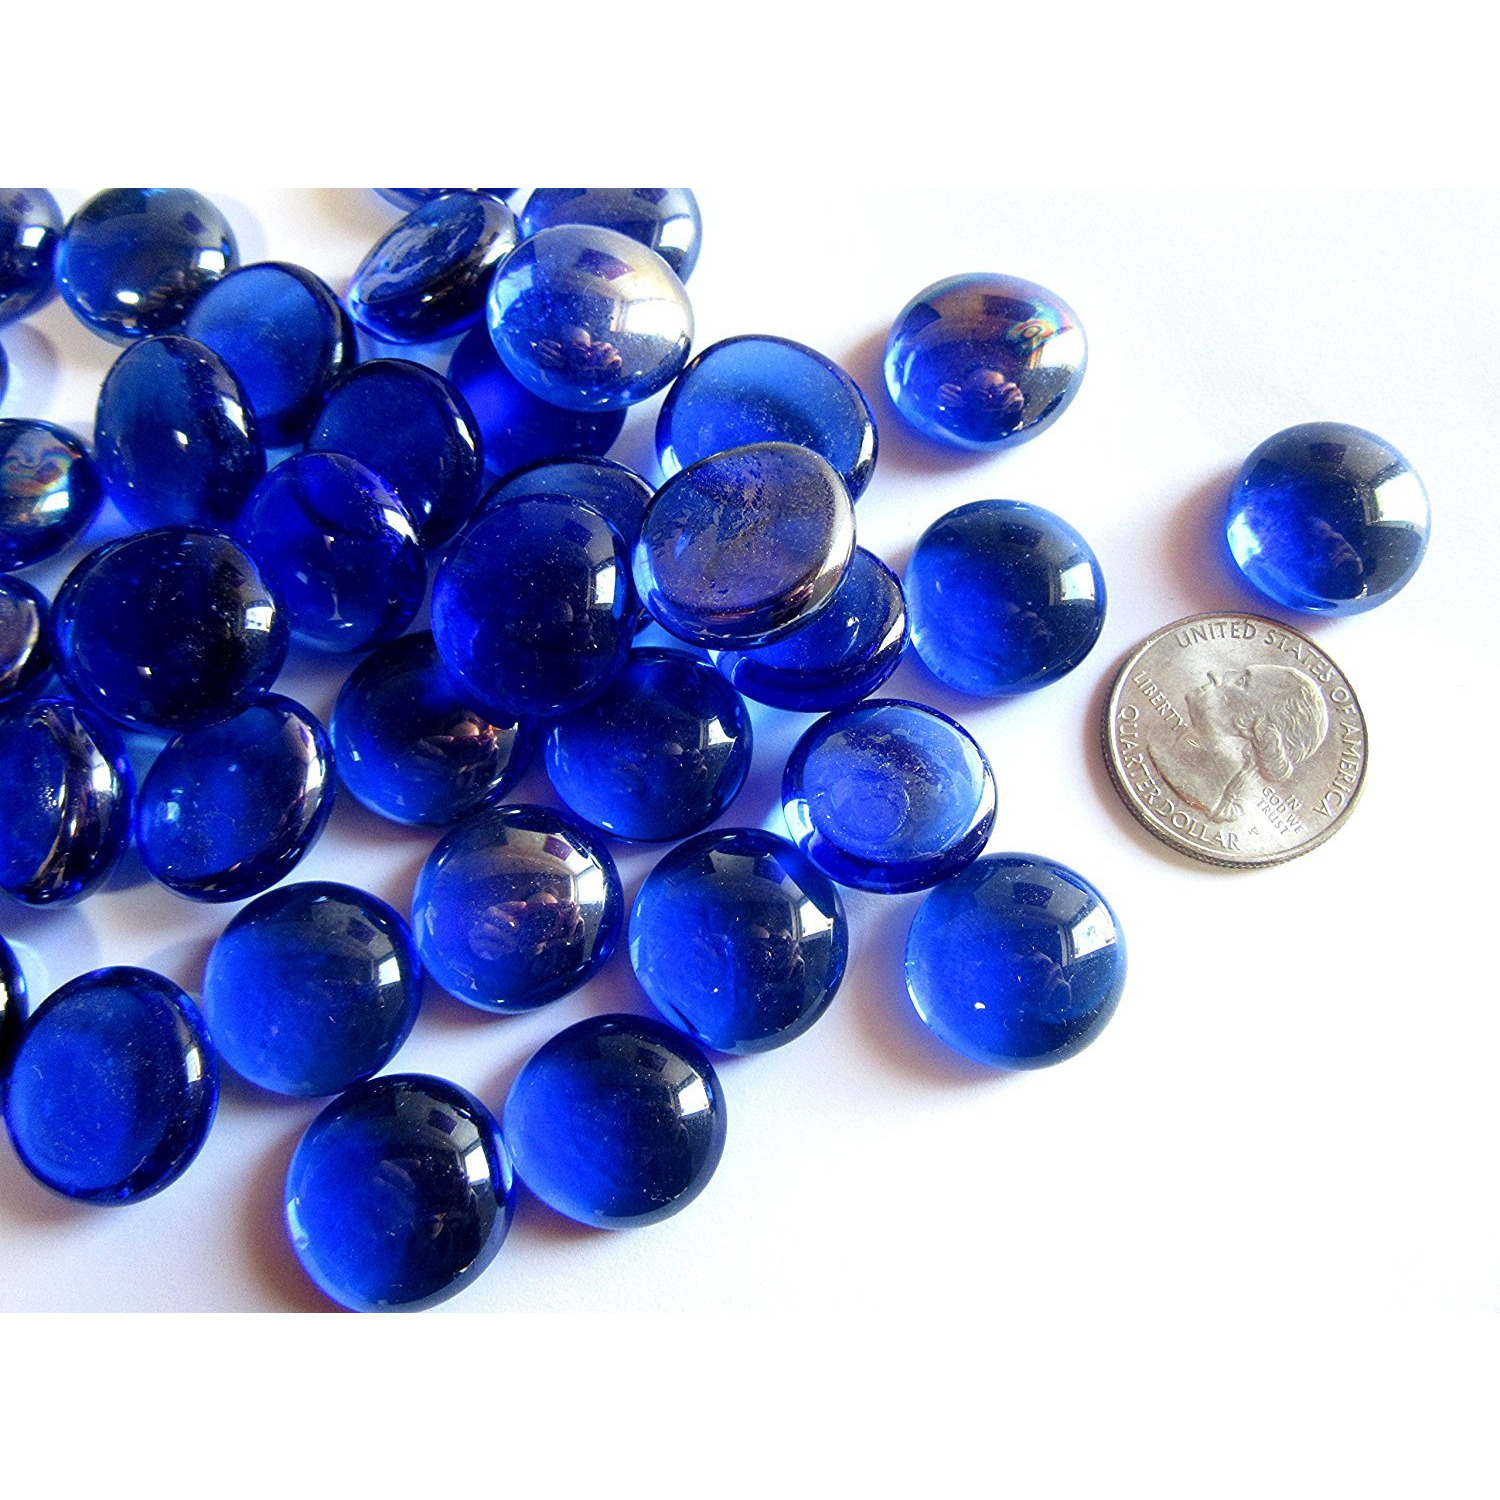 Buy Online Blue Flat Marbles, Pebbles, Glass Gems for Vase Fillers, Party  Table Scatter, Wedding, Decorat -  539524